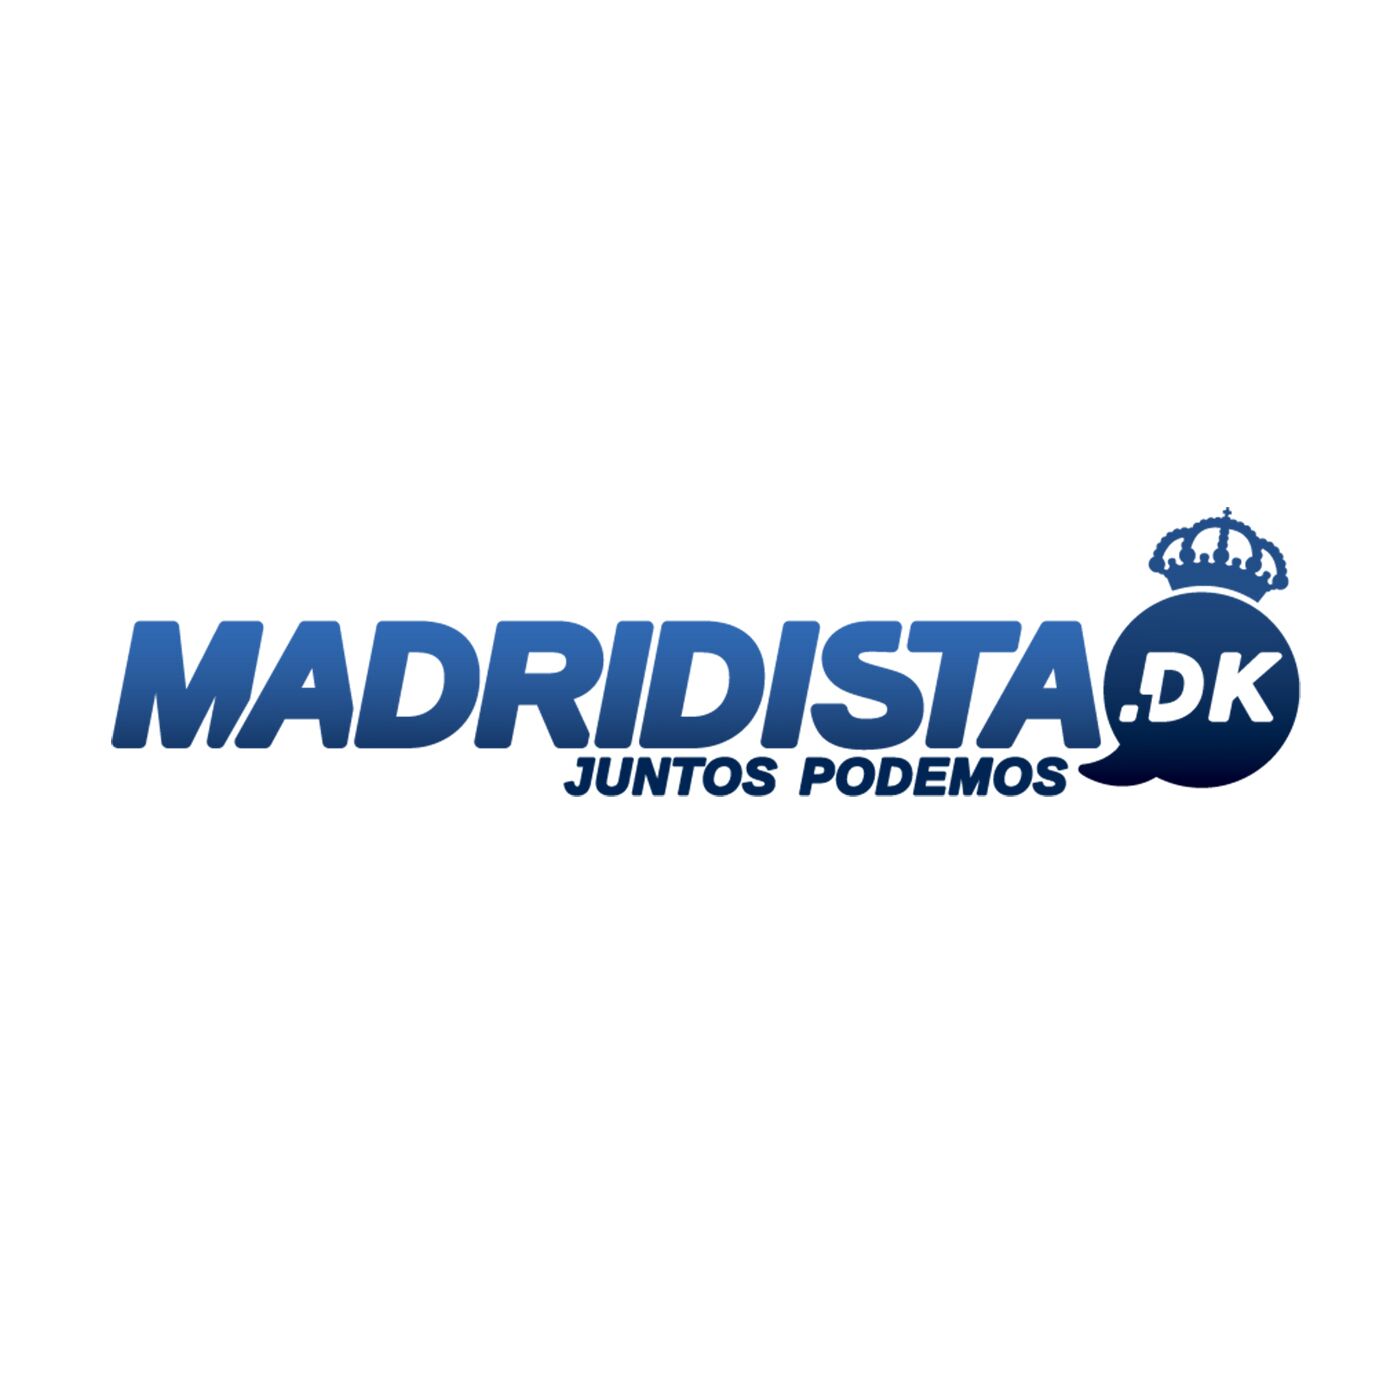 Madridista.dk logo